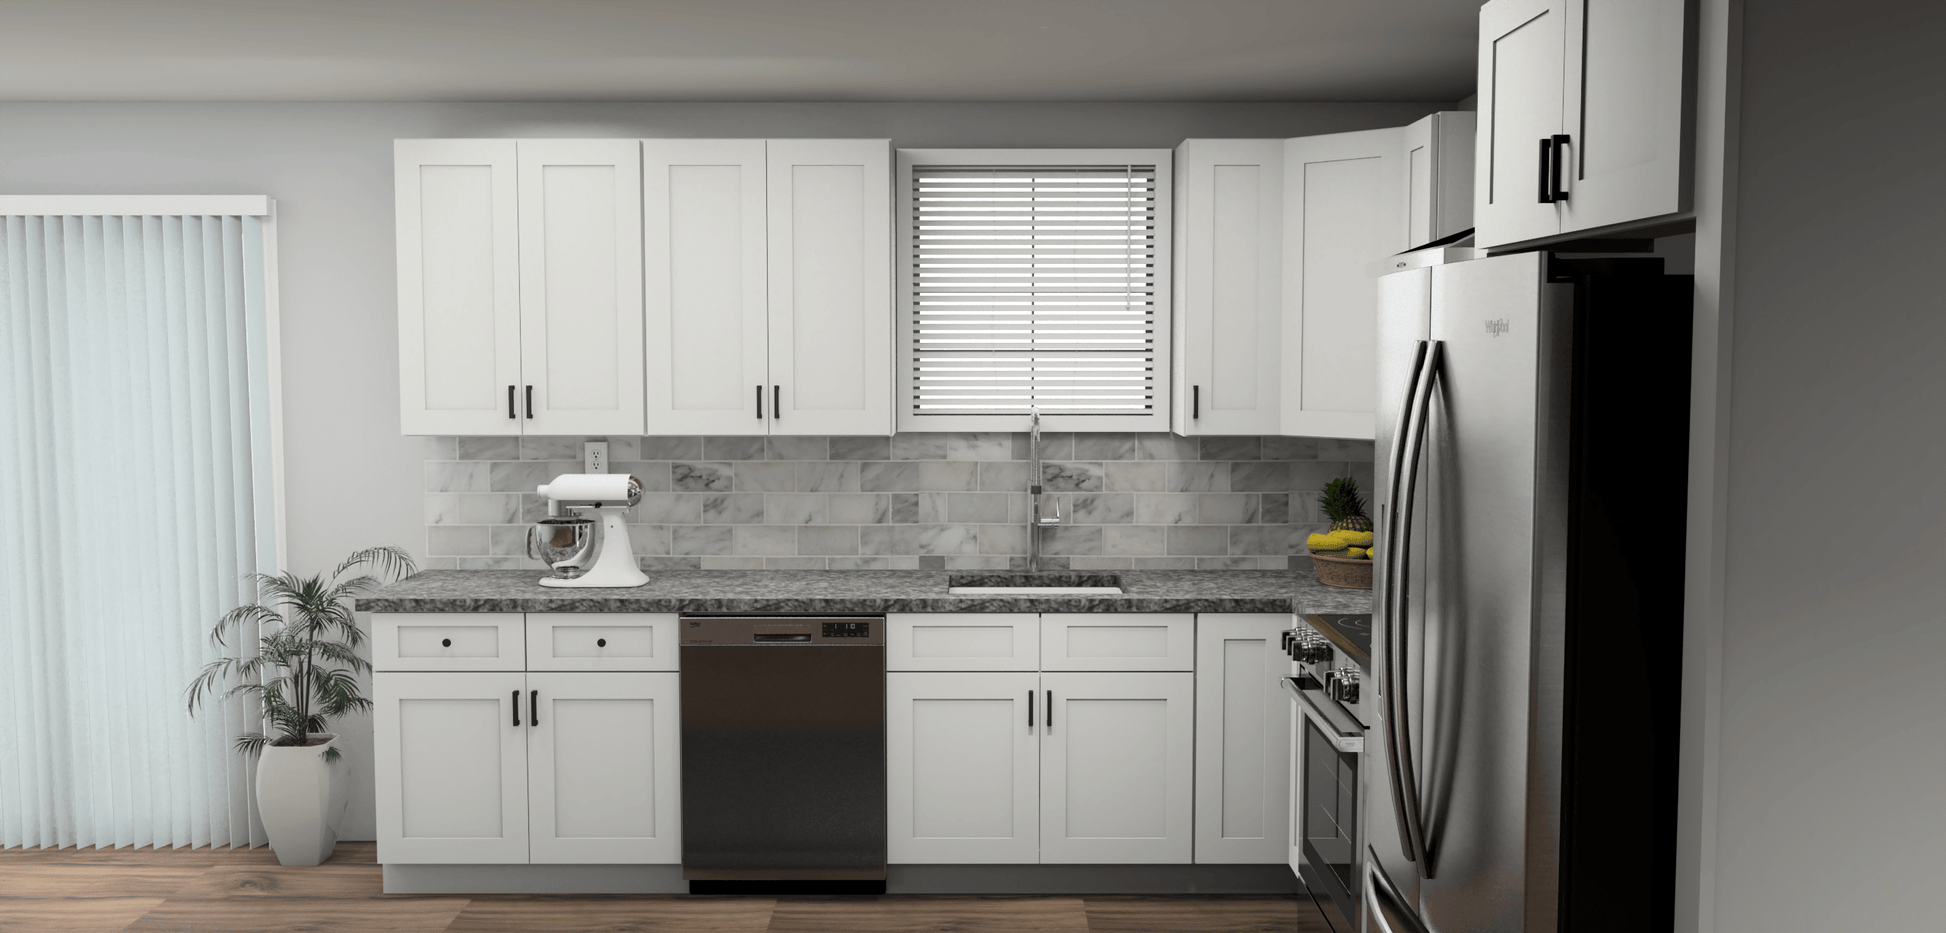 Fabuwood Allure Galaxy Frost 11 x 11 L Shaped Kitchen Side Layout Photo